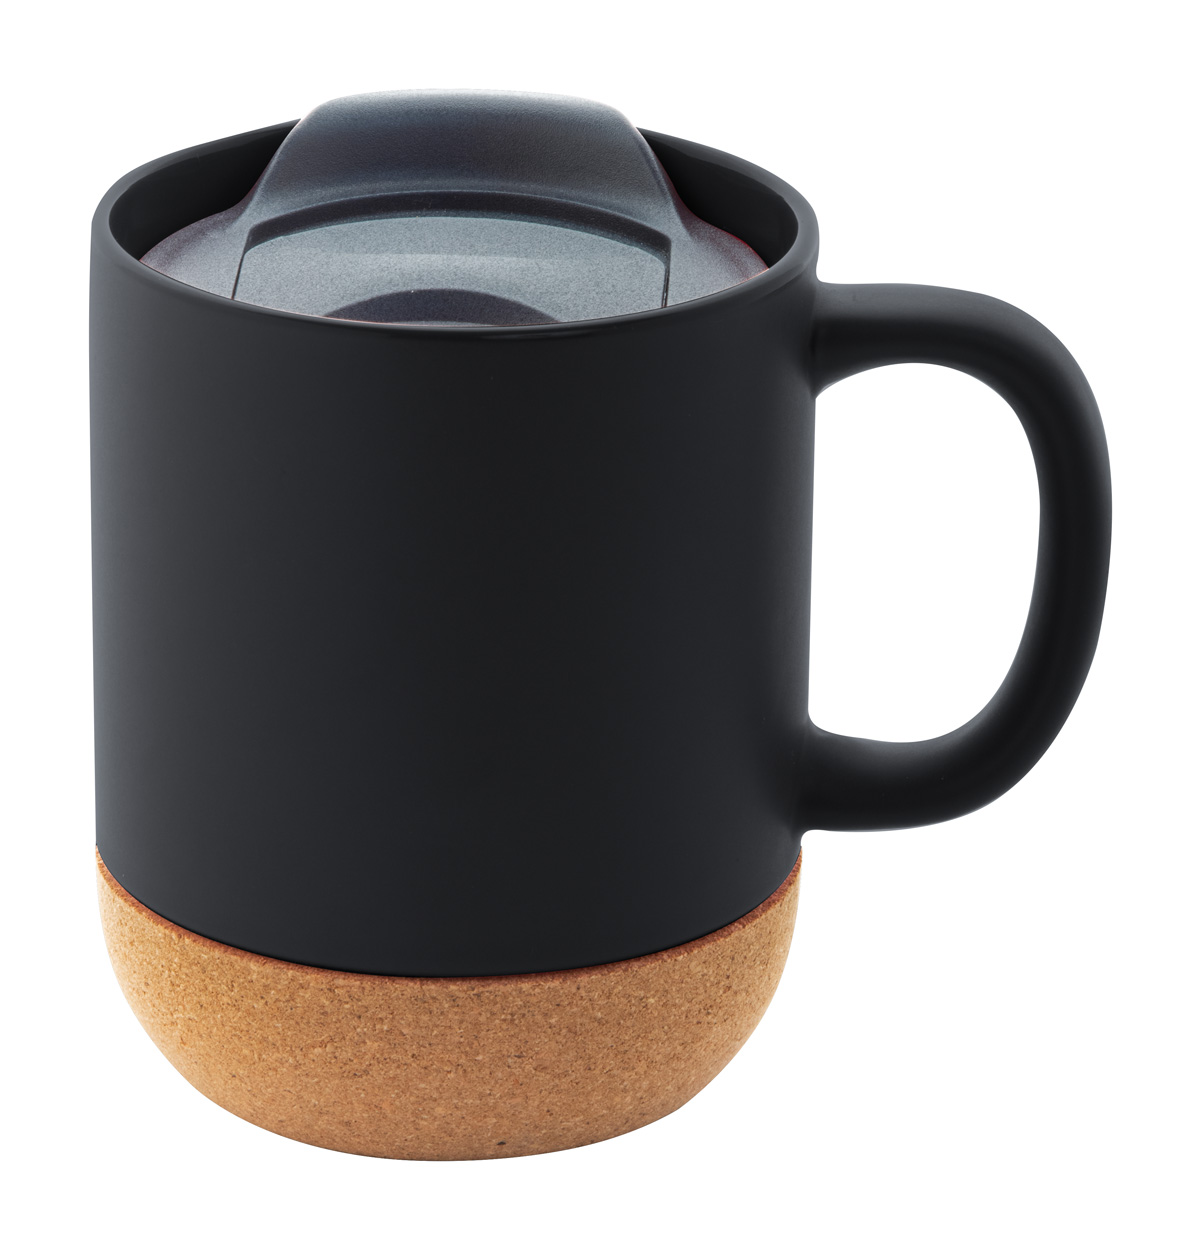 Komagu mug - black